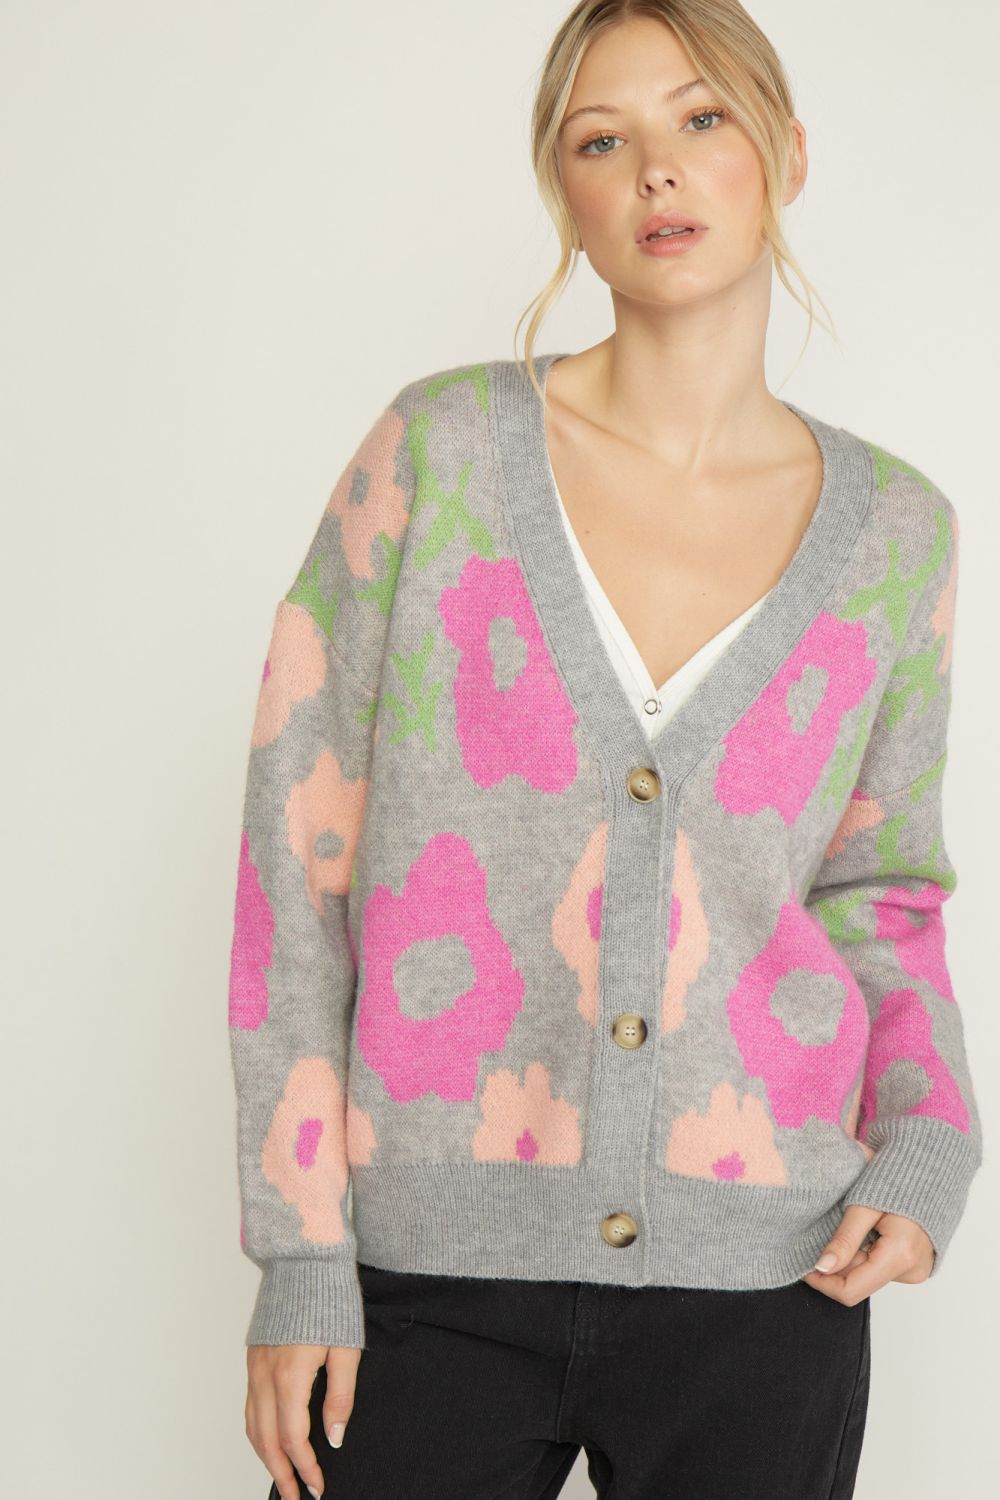 entro floral grey pink sweater cardigan